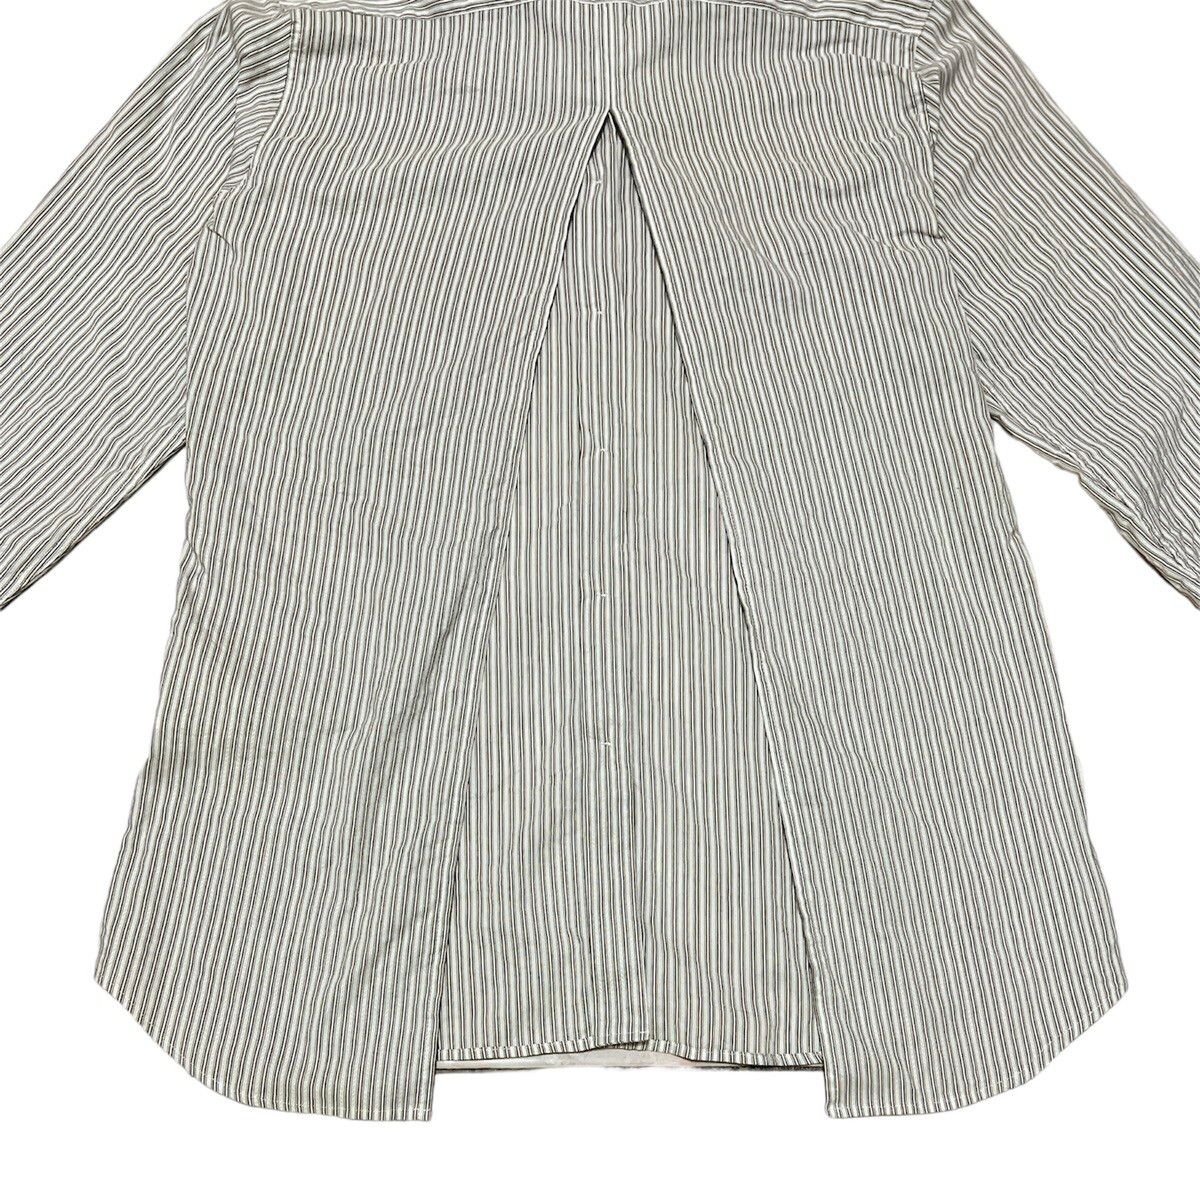 Miu Miu striped button ups shirt 2006 - 8